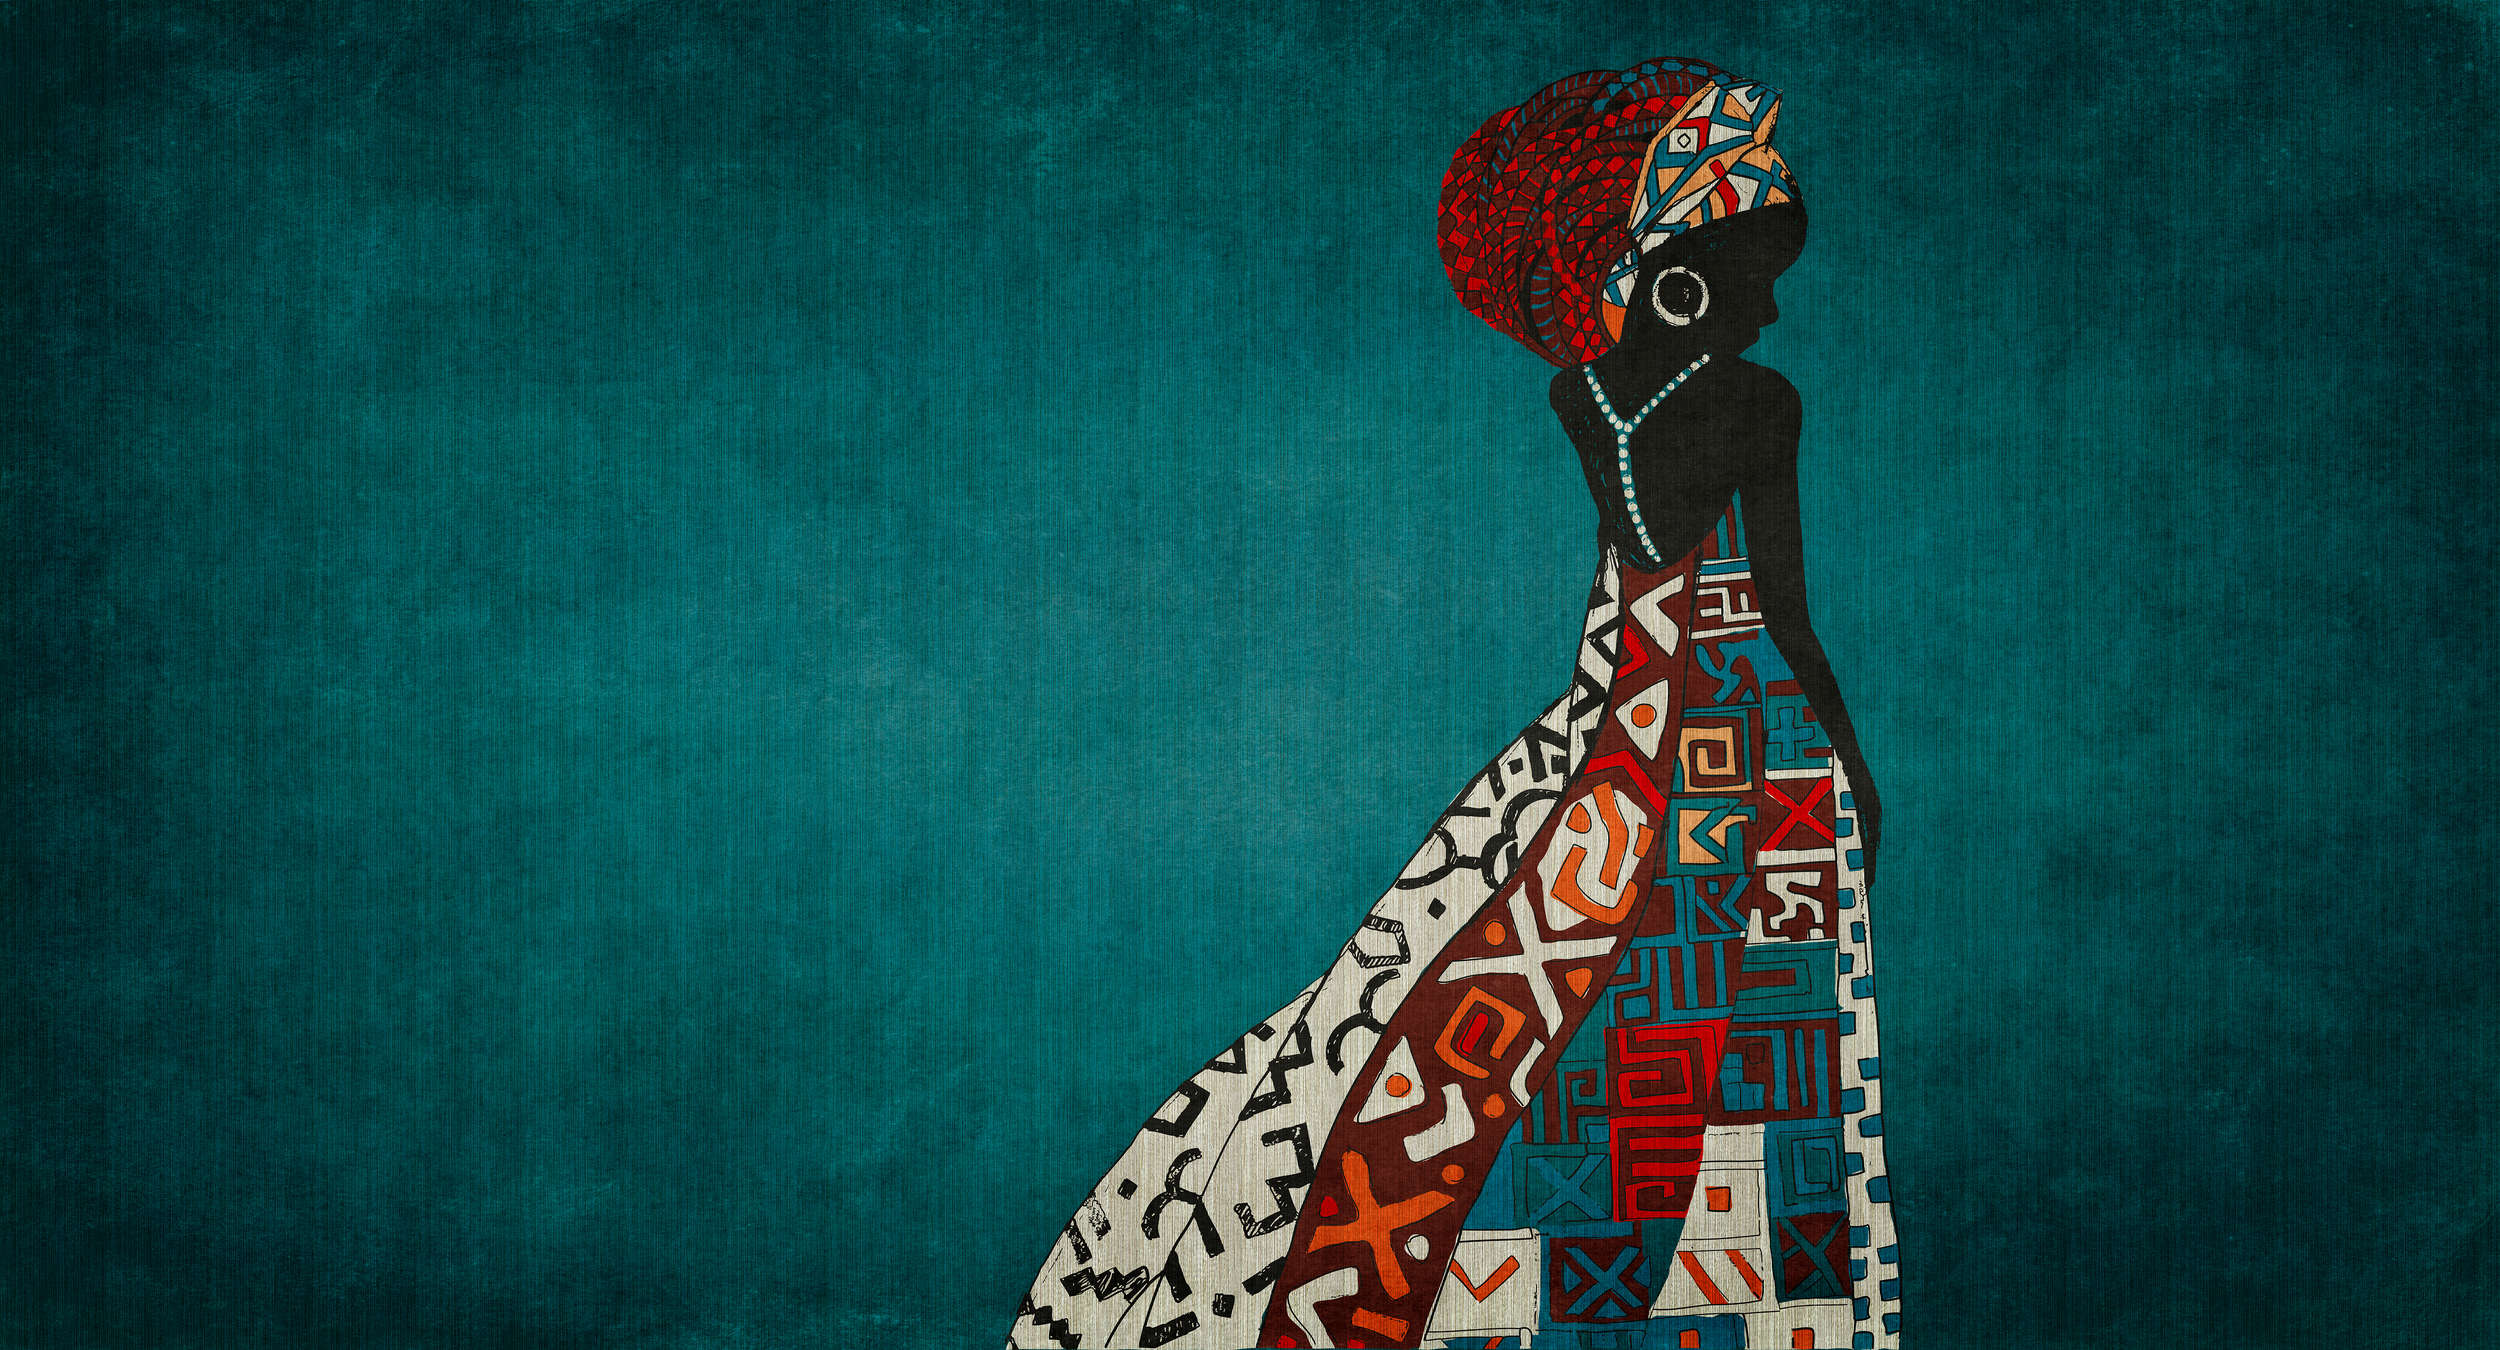             Nairobi 1 - Mural Mujeres Sillouette Estilo Africano
        